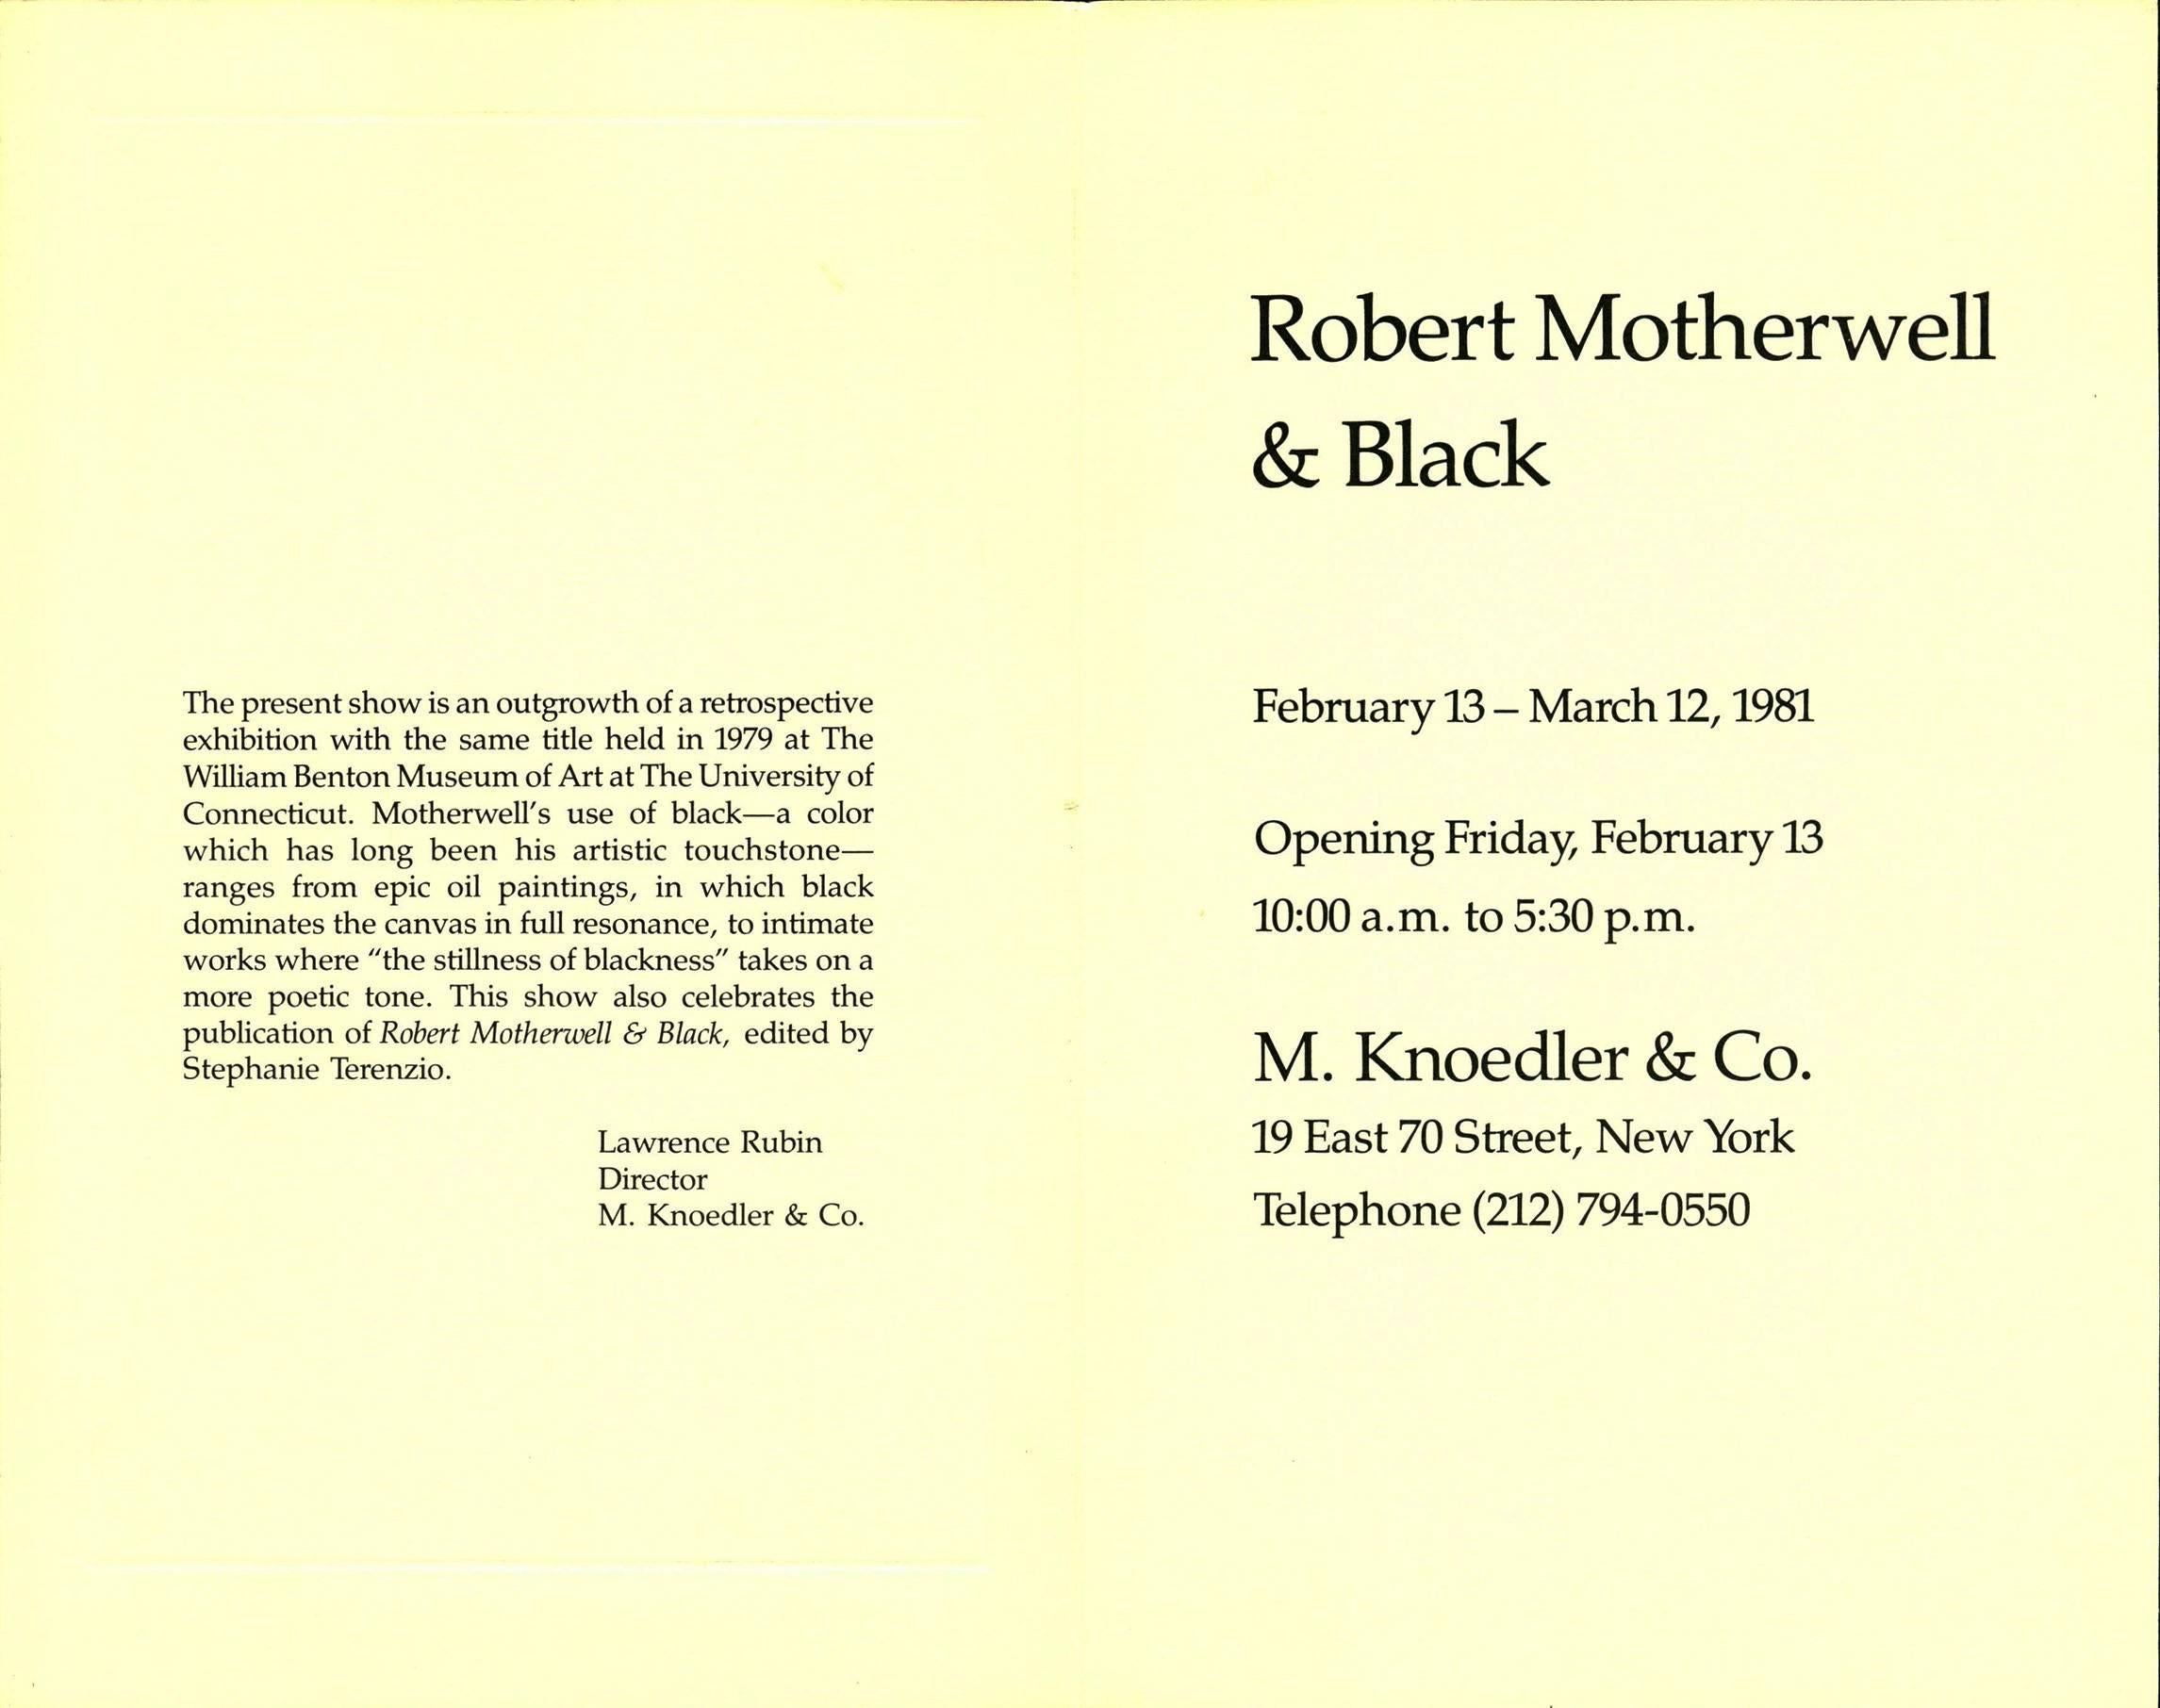 Vintage Robert Motherwell Announcement card:
